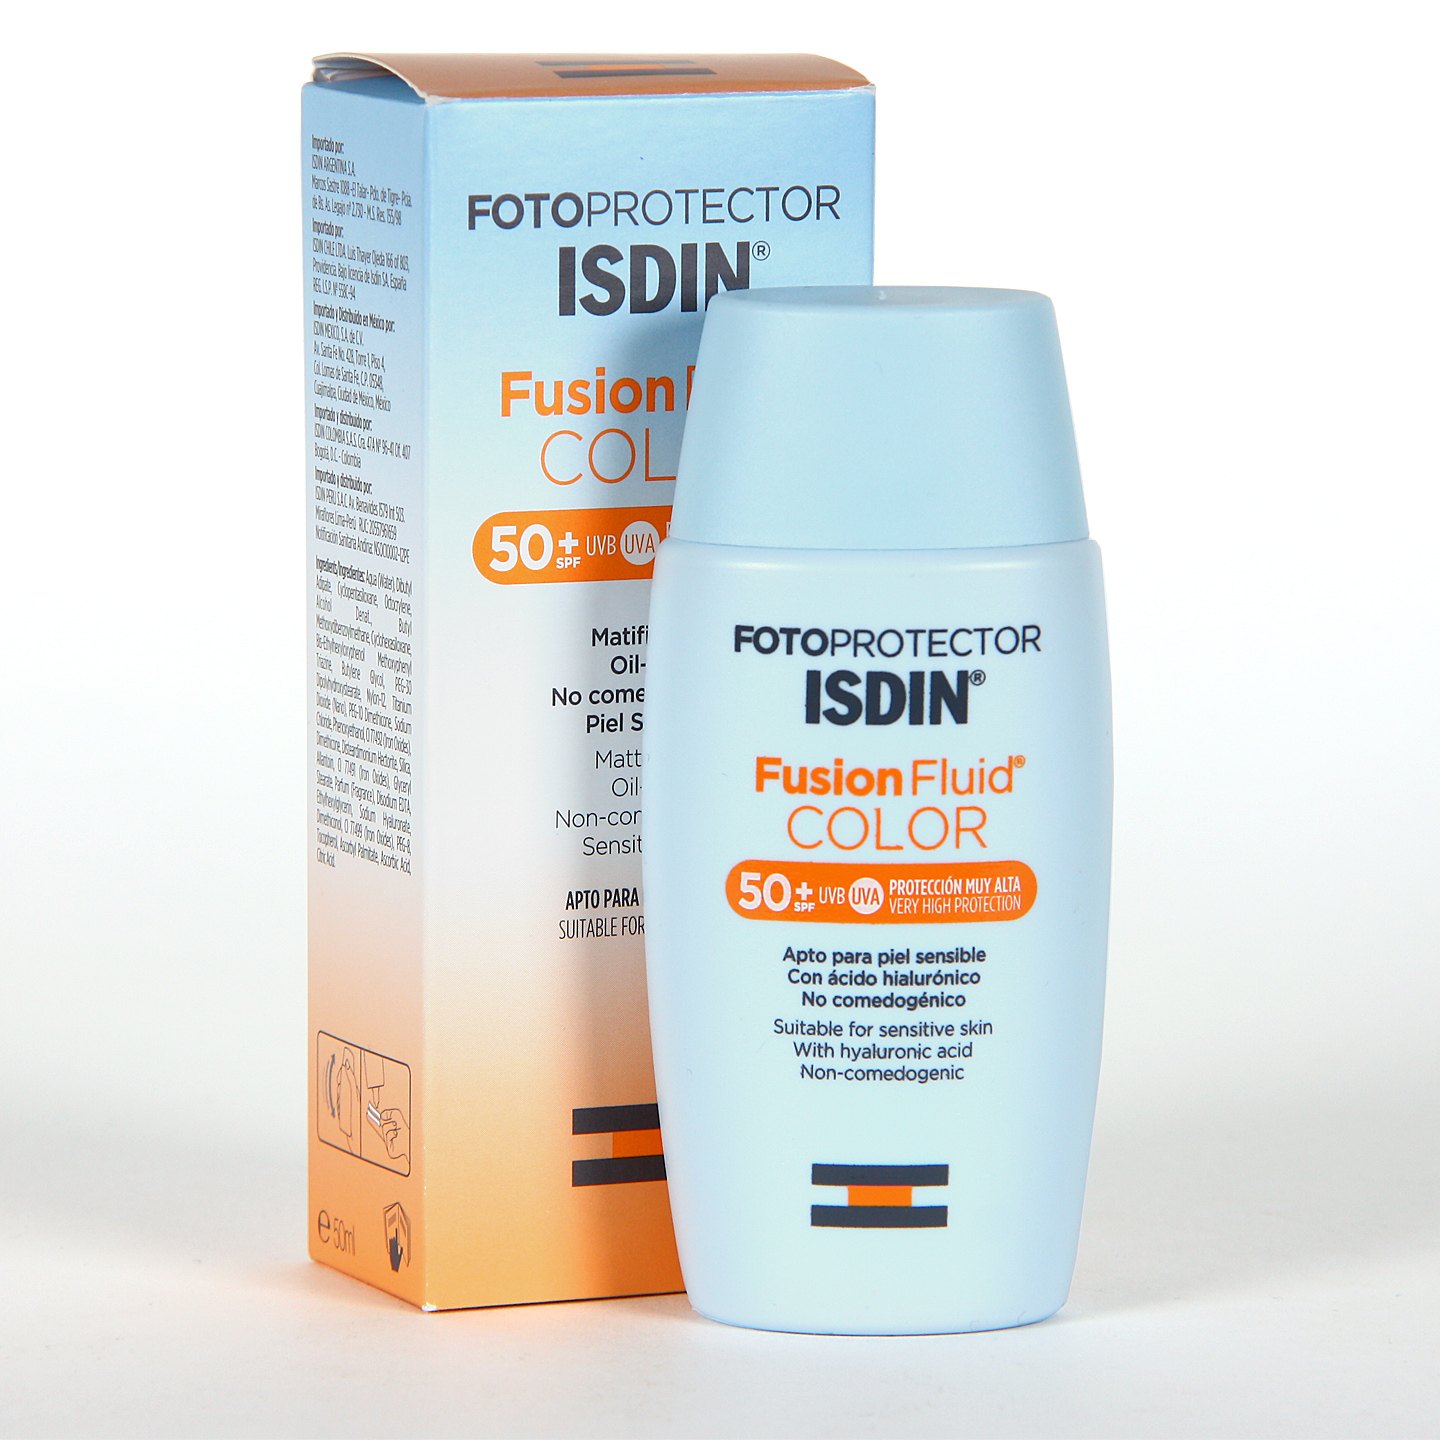 Protector solar facial para bebé fusion fluid spf50 50 ml, ISDIN - ISDIN